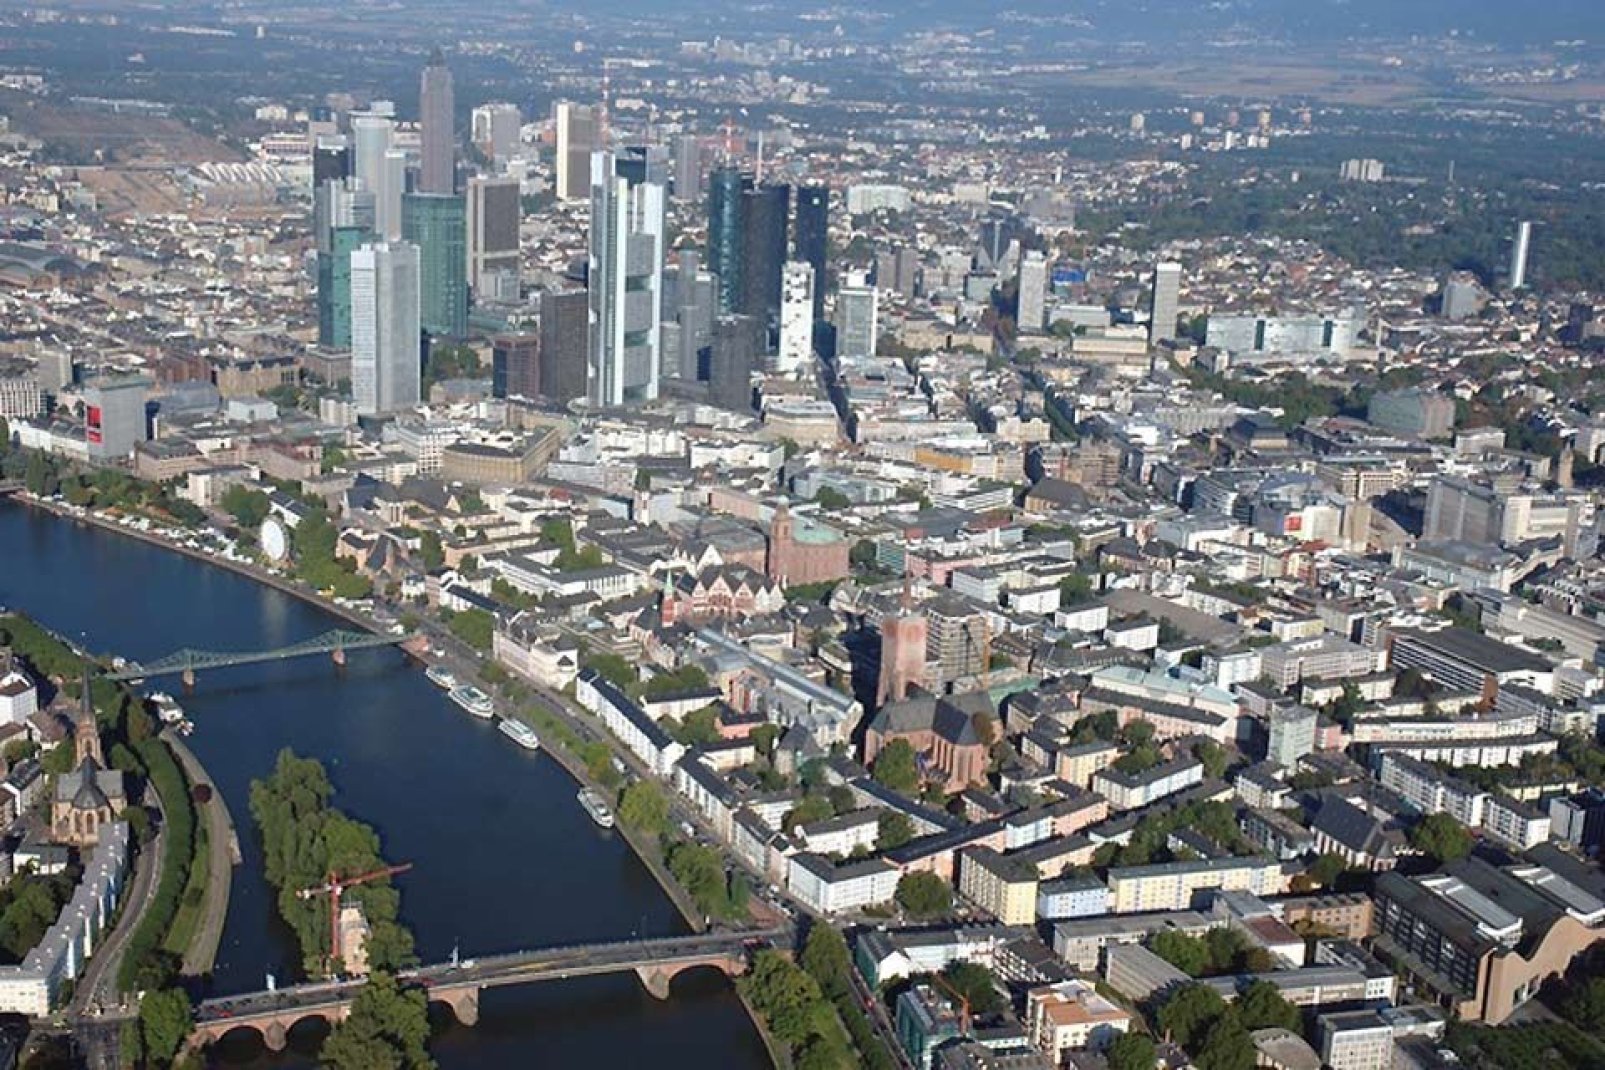 Frankfurt is known worldwide for being a finance hub.